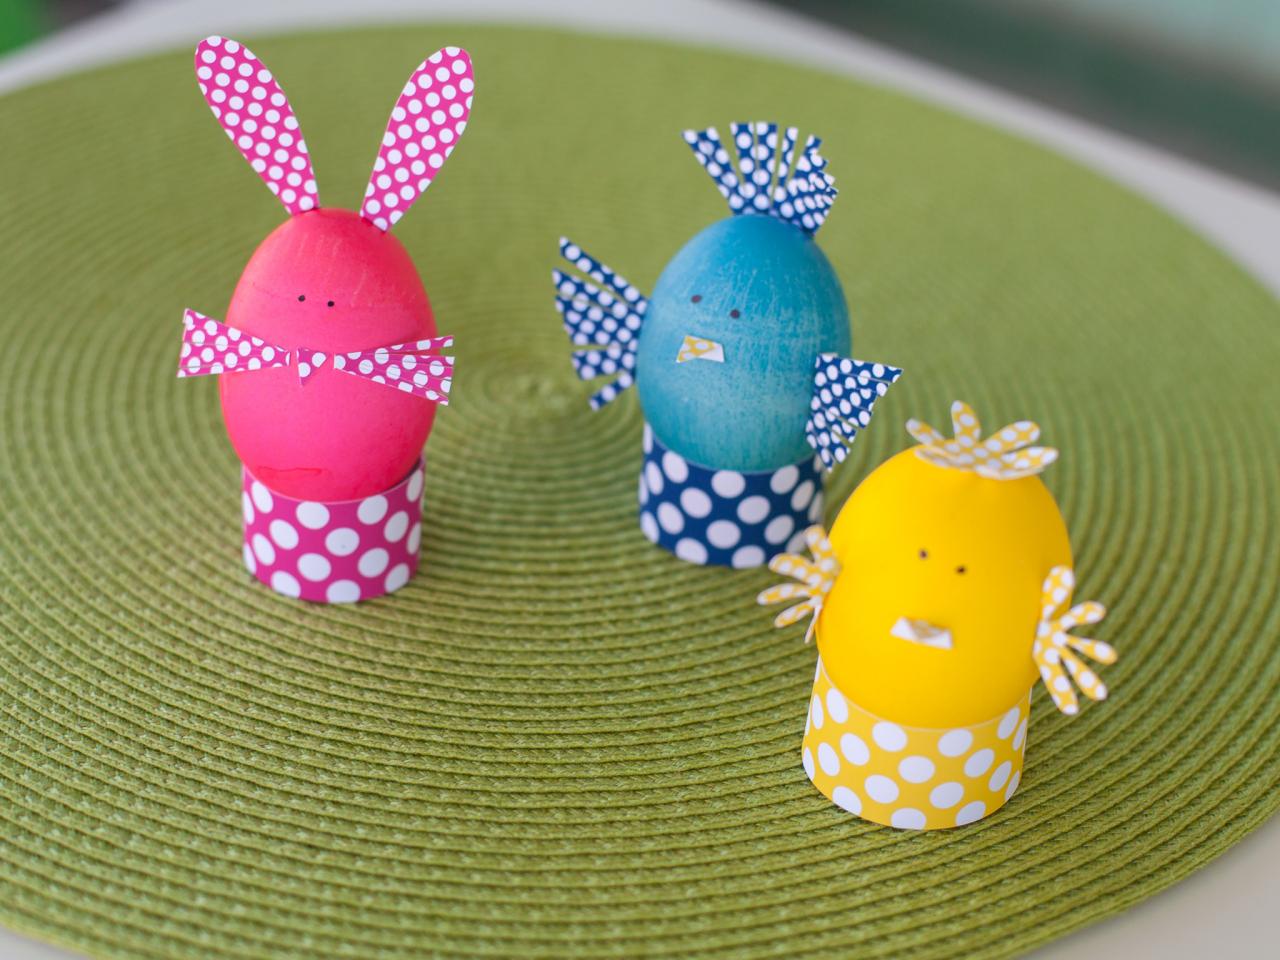 http://hgtvhome.sndimg.com/content/dam/images/hgtv/fullset/2013/2/26/1/Original_Kim-Stoegbauer-Easter-Egg-Decorating-Party-Paper-Animal-Eggs-Beauty_s4x3.jpg.rend.hgtvcom.1280.960.jpeg